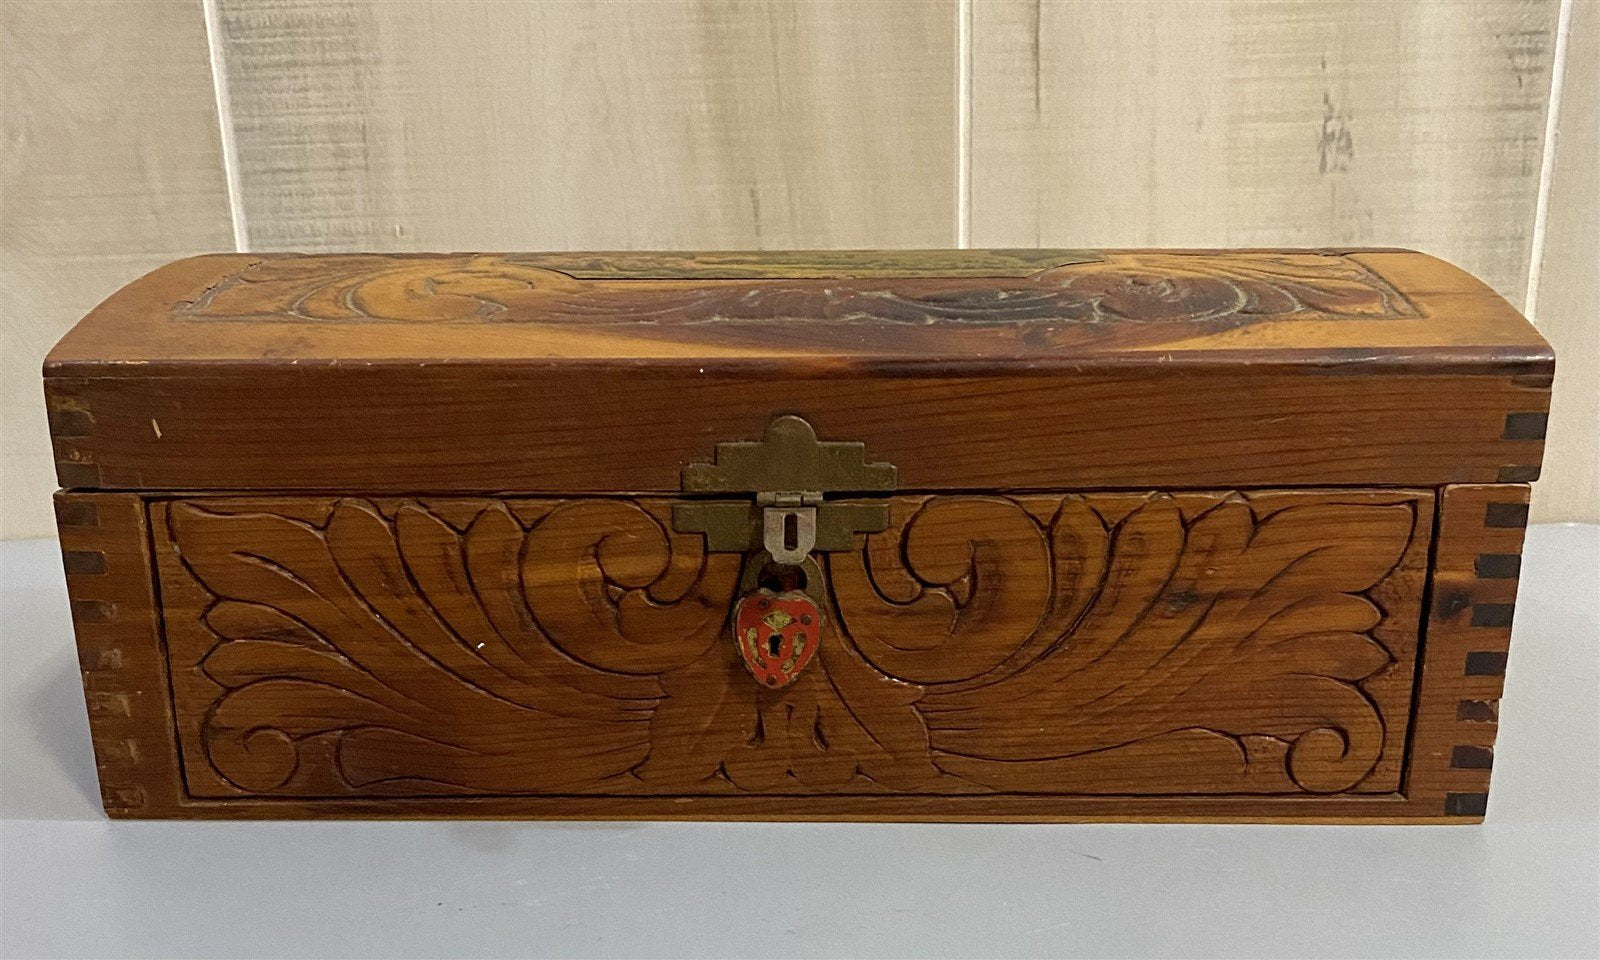 Unlined Unbranded Carved Vintage Cedar Keepsake / Jewelry Box with Mirror Inside